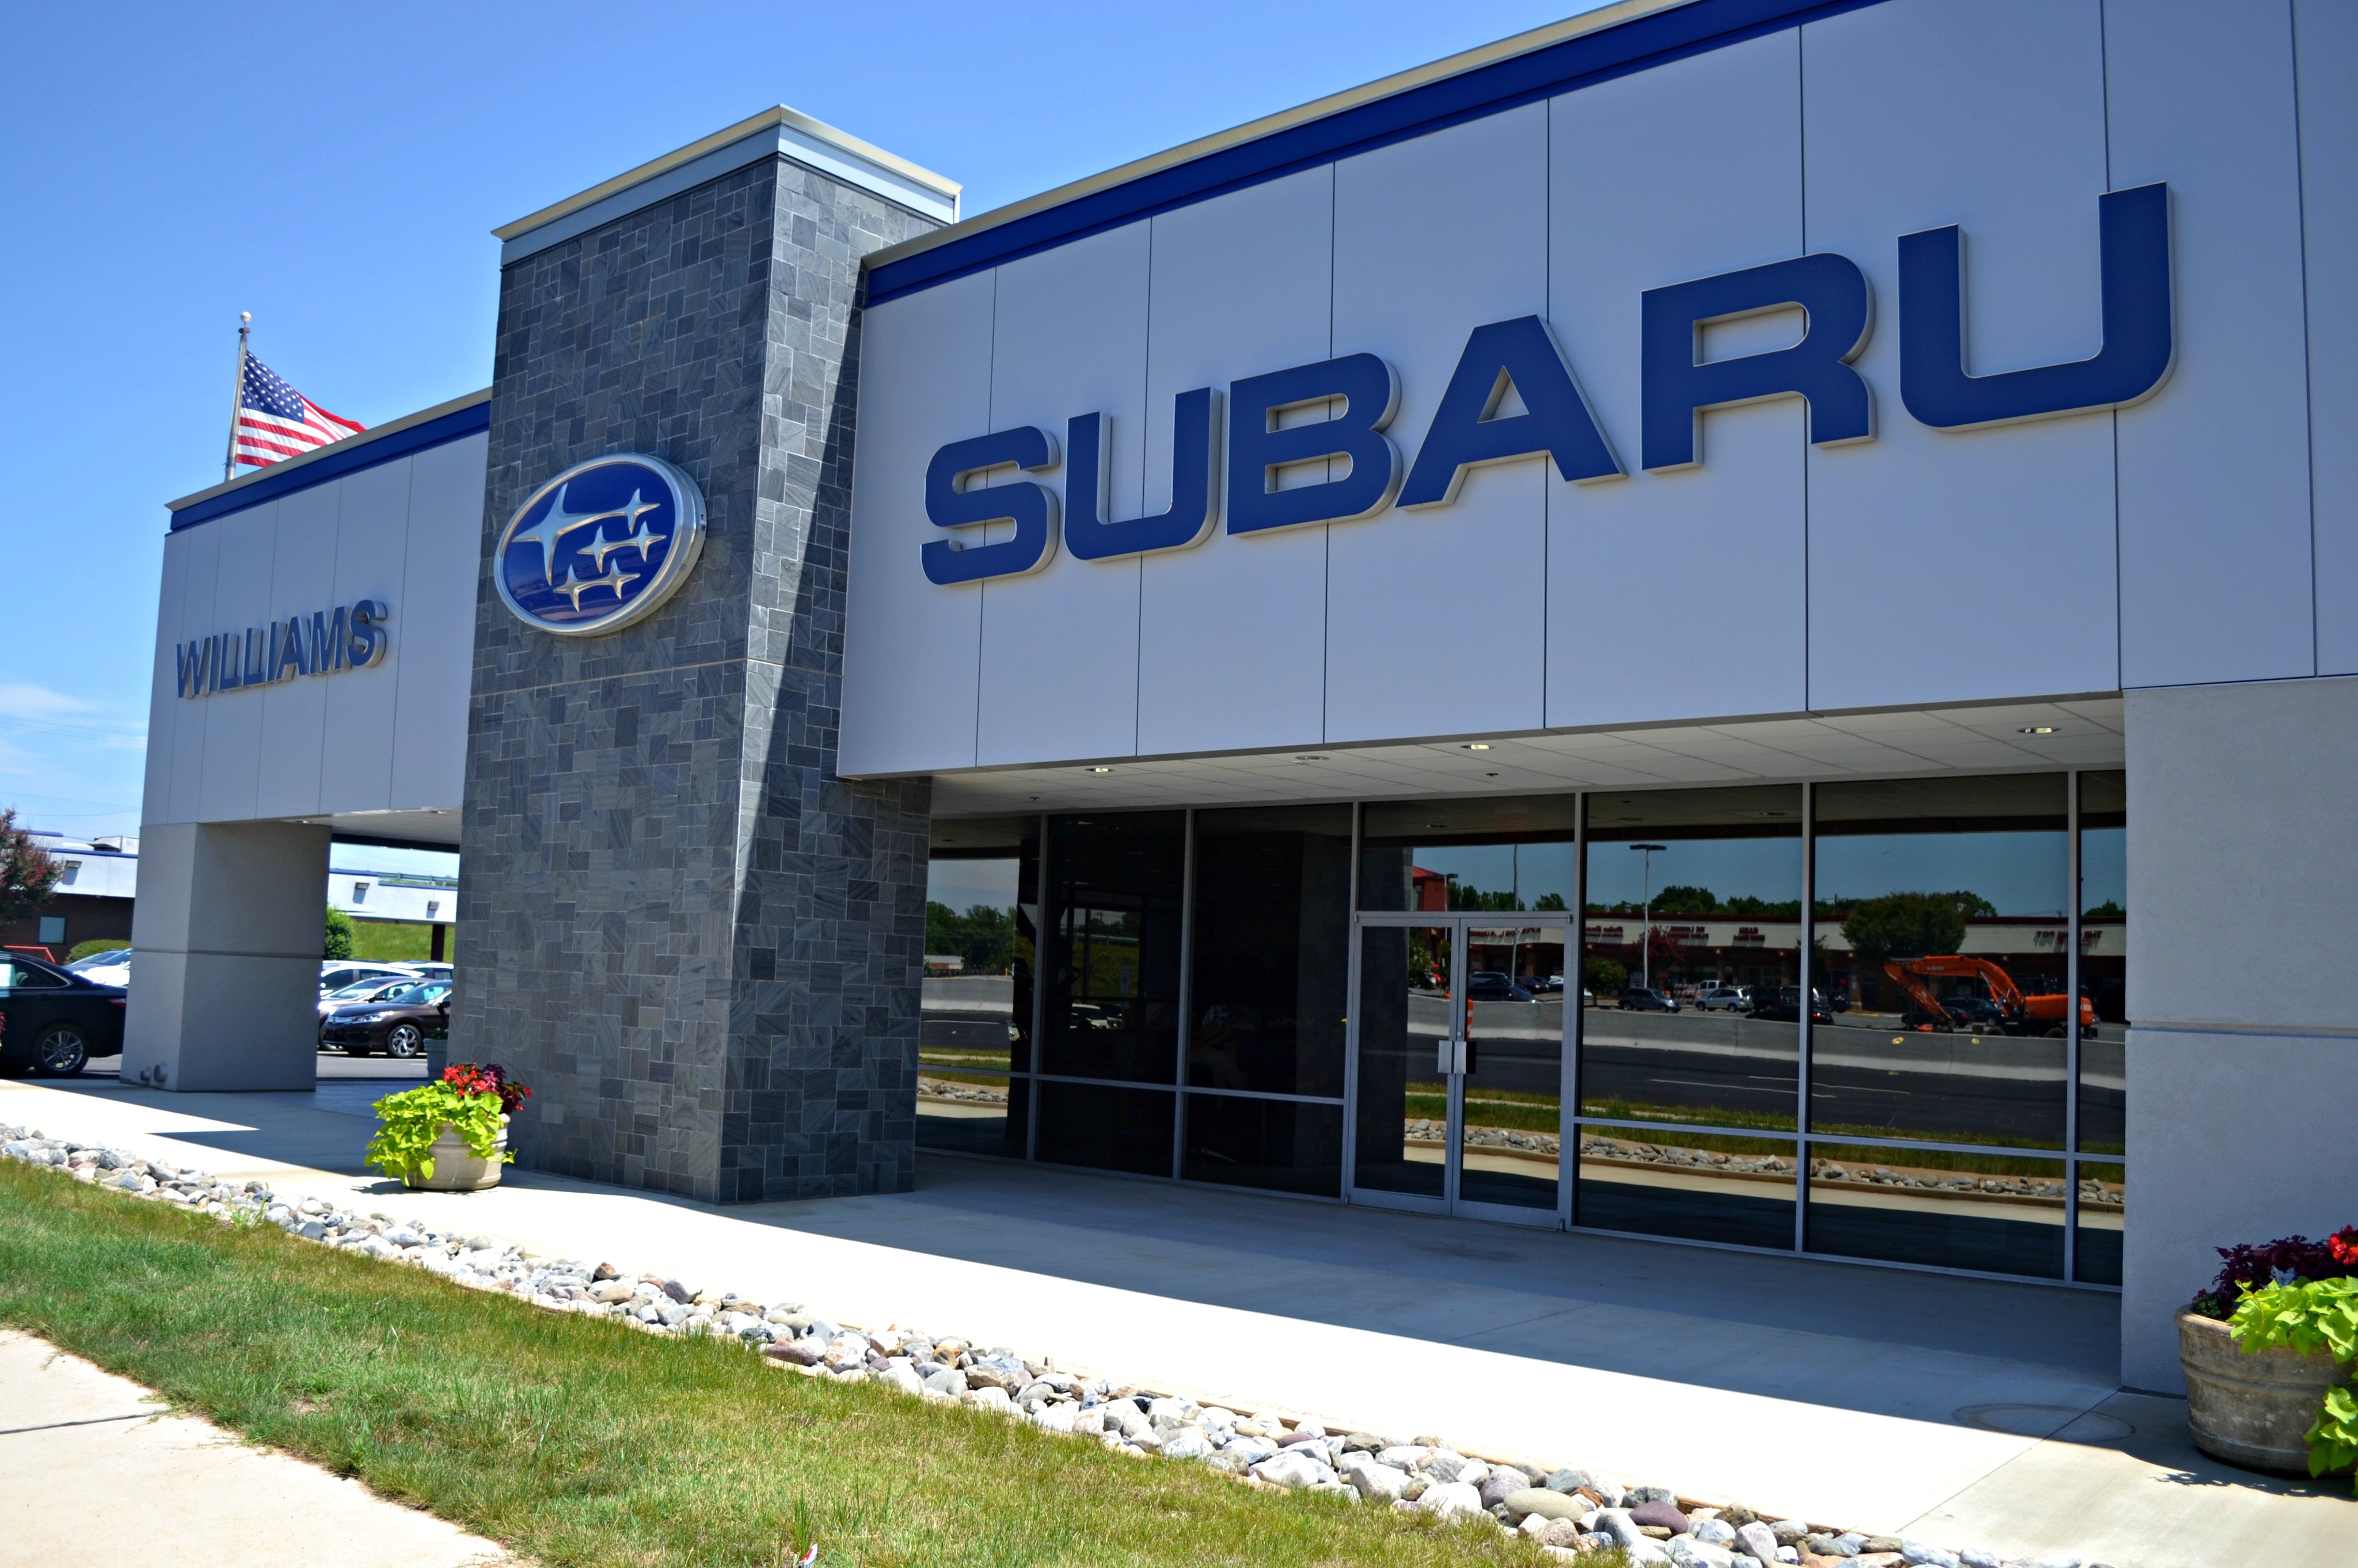 The Williams Subaru dealership in Charlotte is shown.